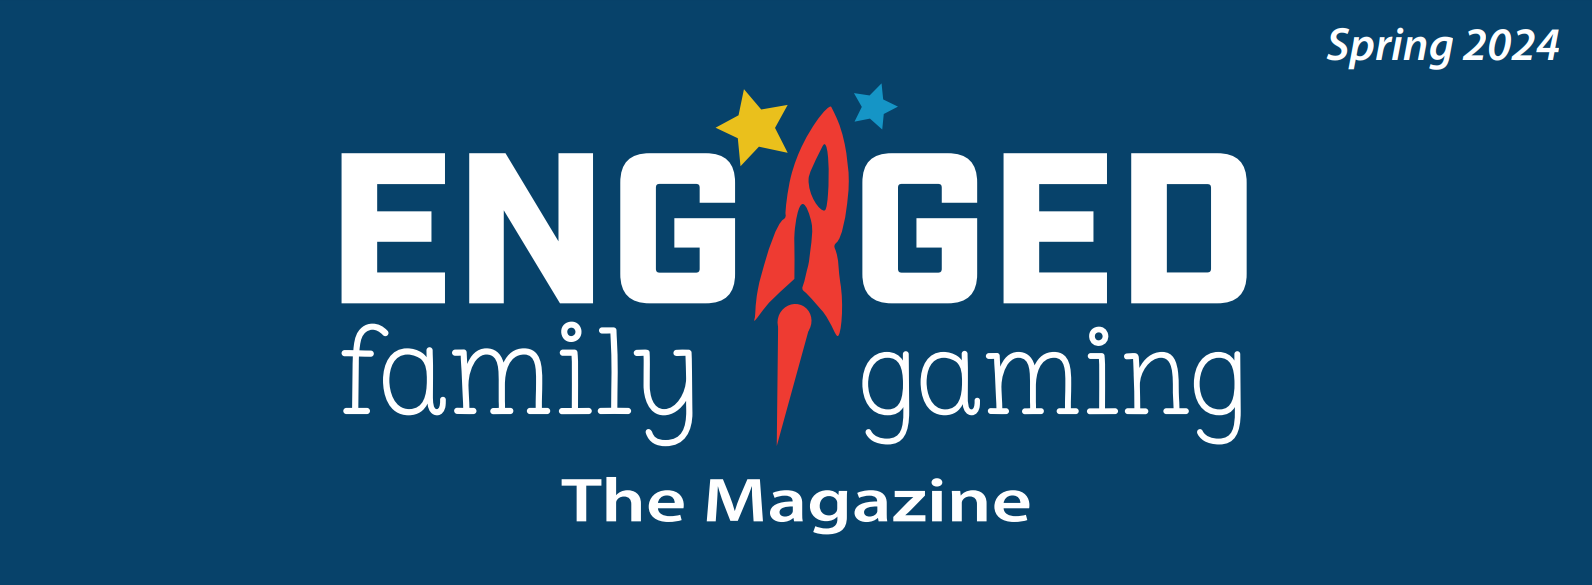 Engaged Family Gaming Magazine Spring 2024